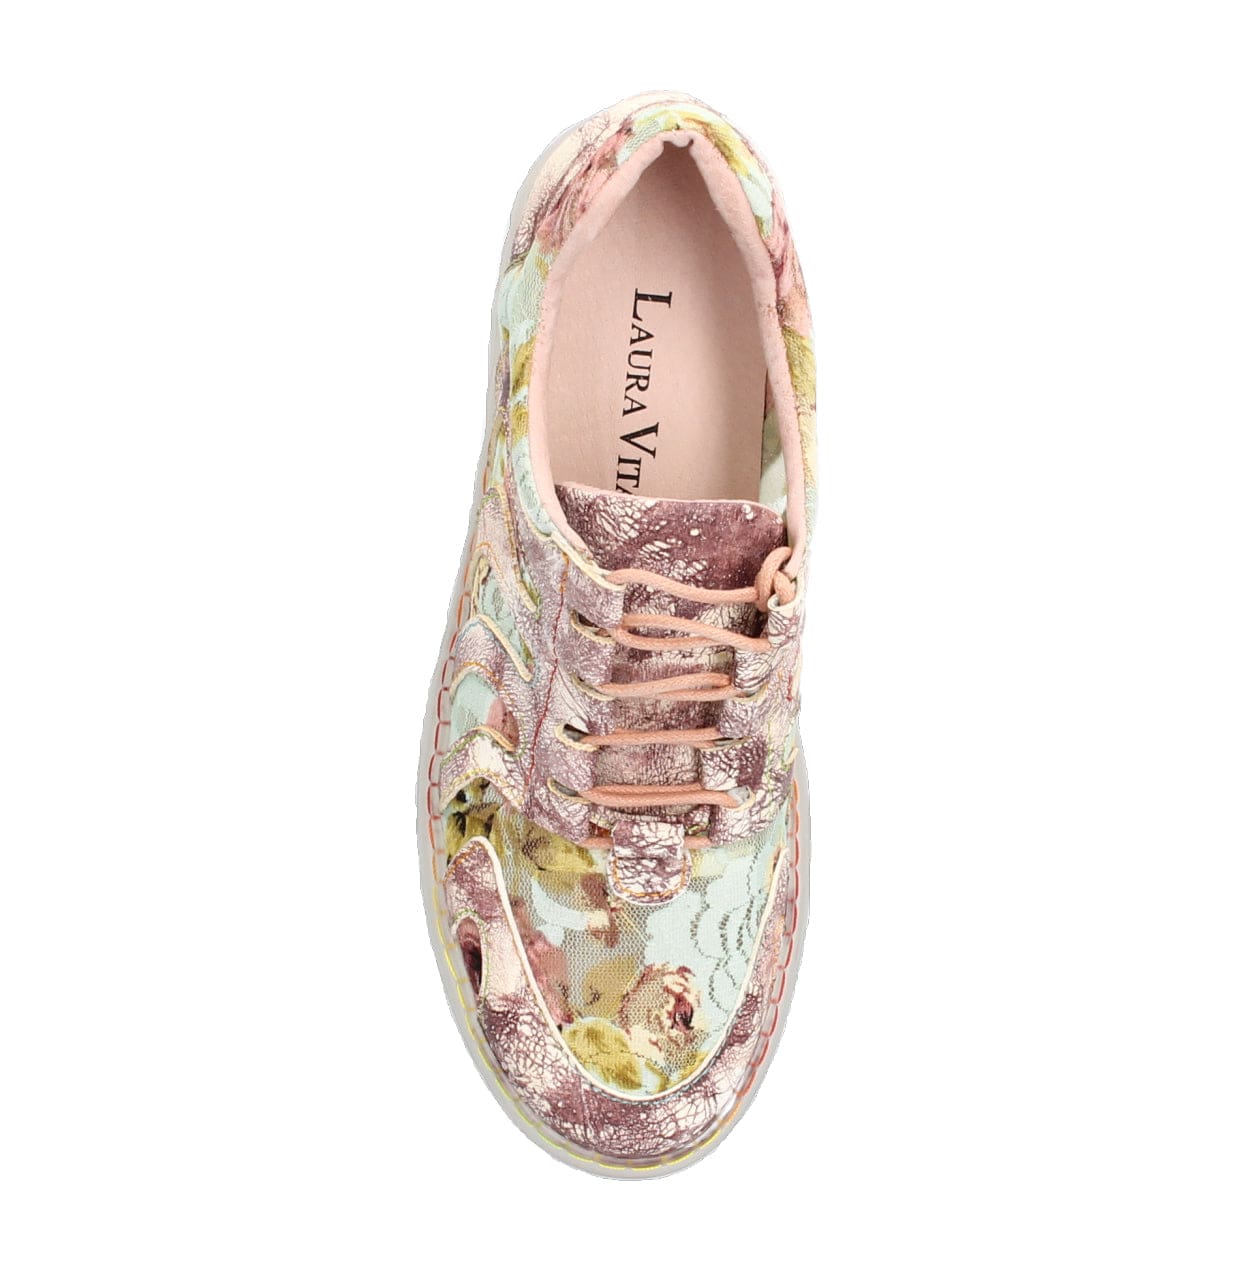 HOCIMALO 01 Flower Shoes - Sport